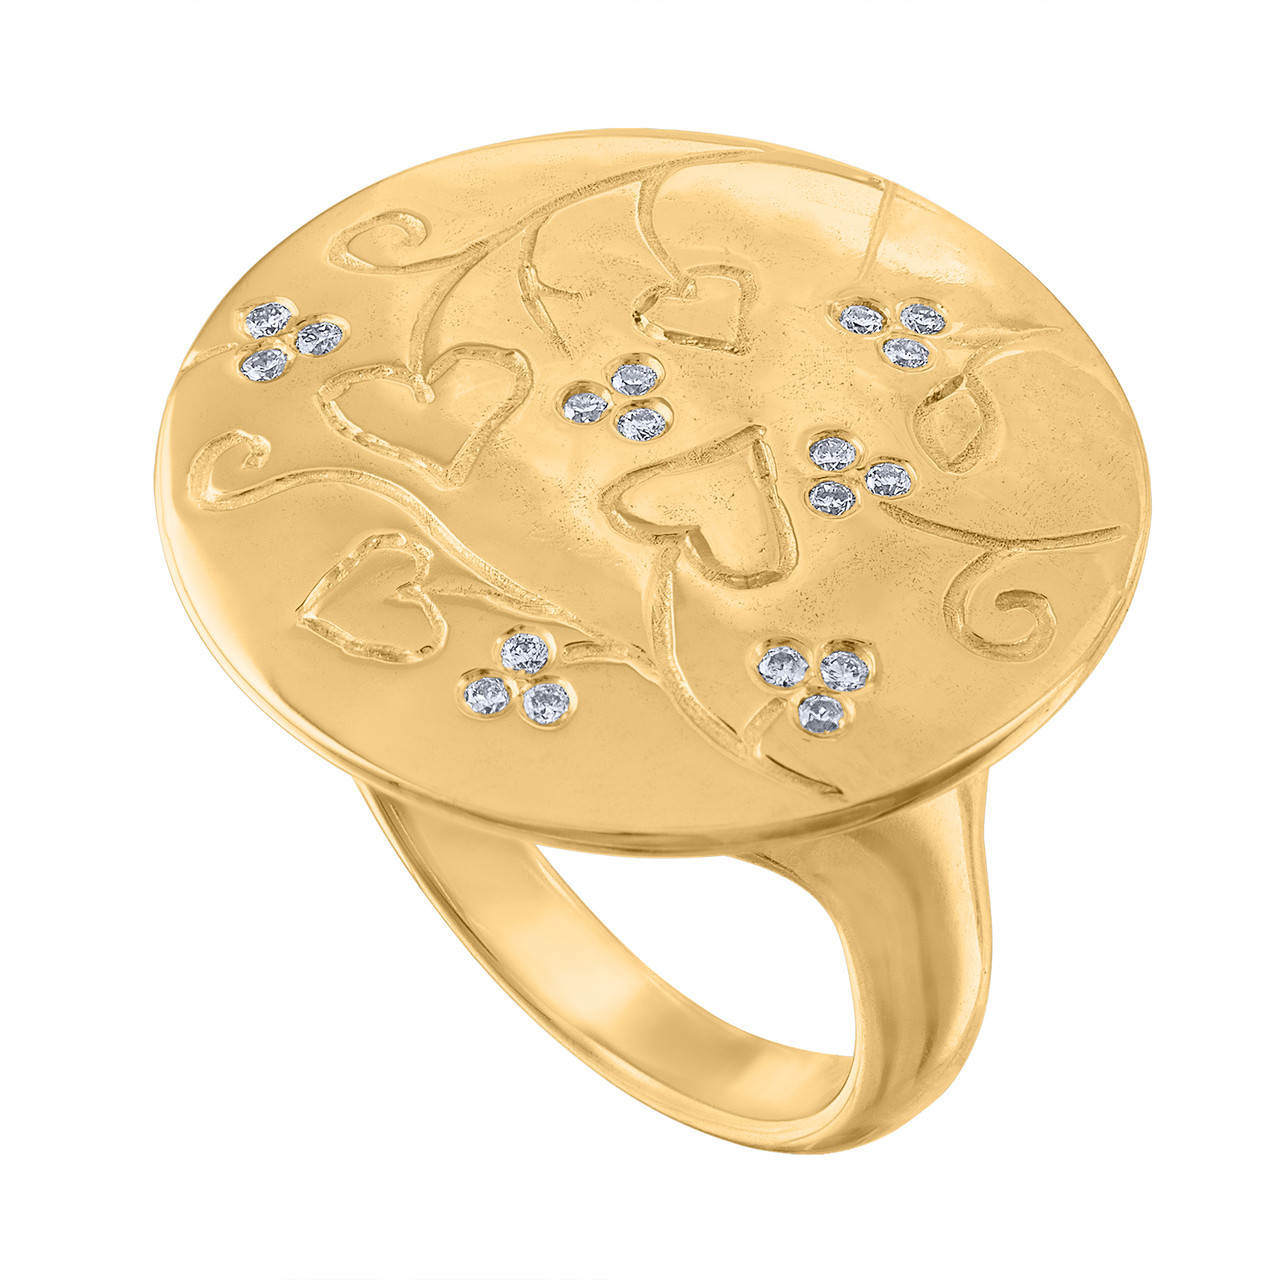 14K White Gold White Yellow Diamond Cocktail Ring for Women Floral Design  1.25ct 802988